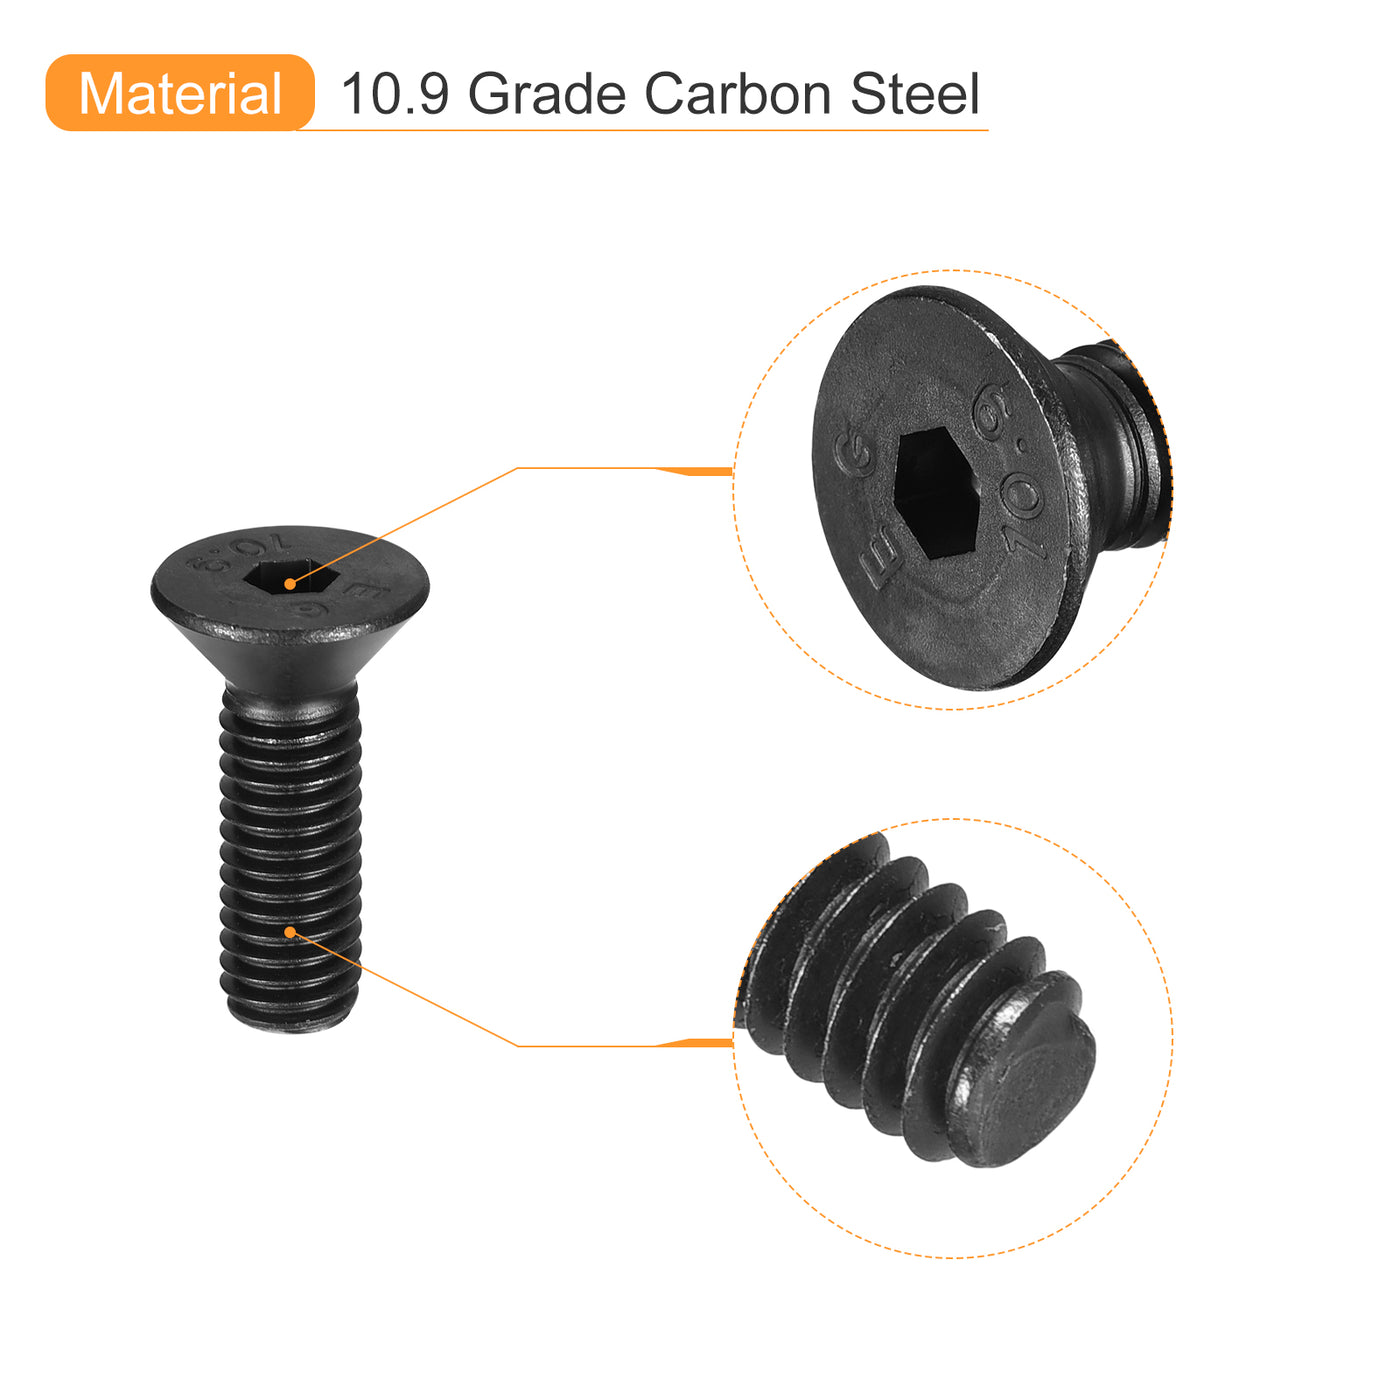 uxcell Uxcell 3/8-16x1-1/4" Flat Head Socket Cap Screws, 10.9 Grade Carbon Steel, 20PCS